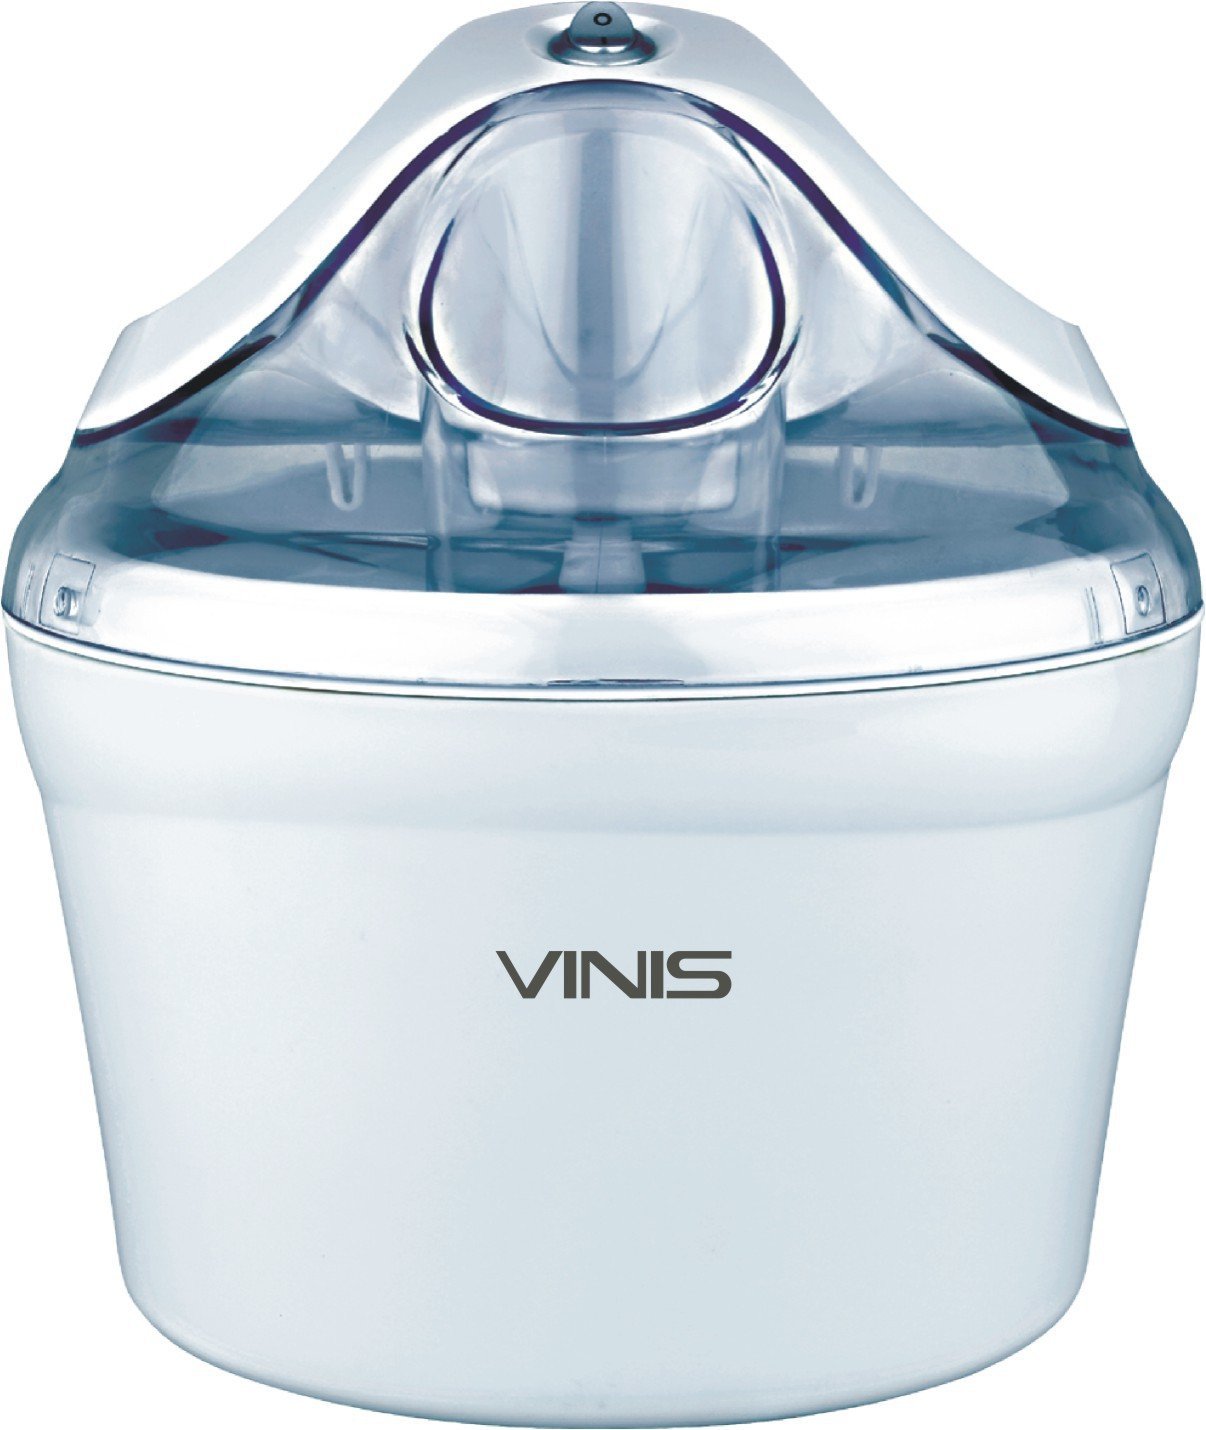 Vinis VIC-1500